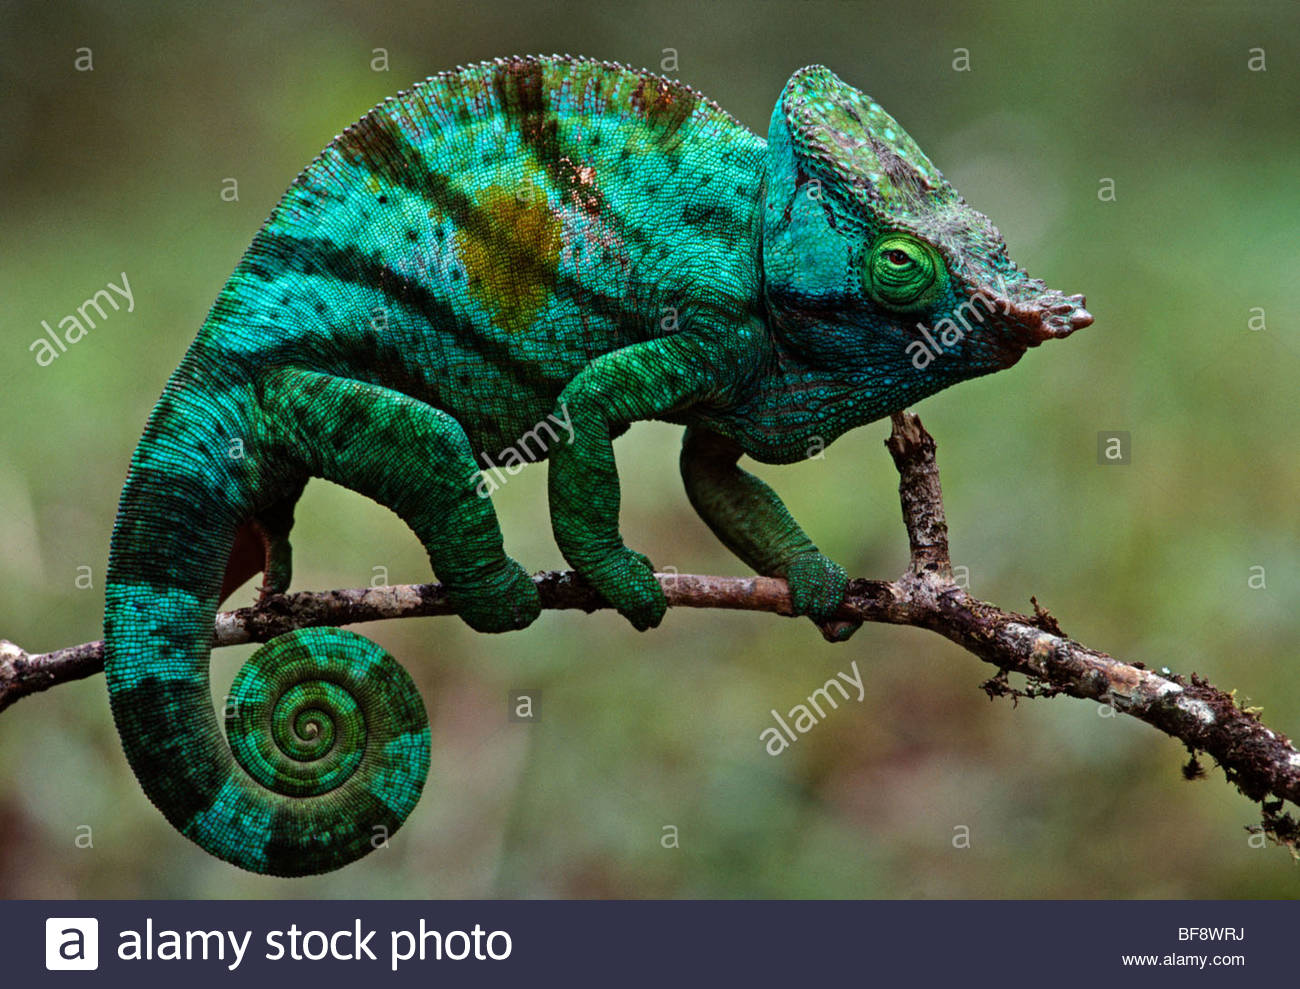 Parson's chameleon with mood-altered pigmentation, Calumma parsonii